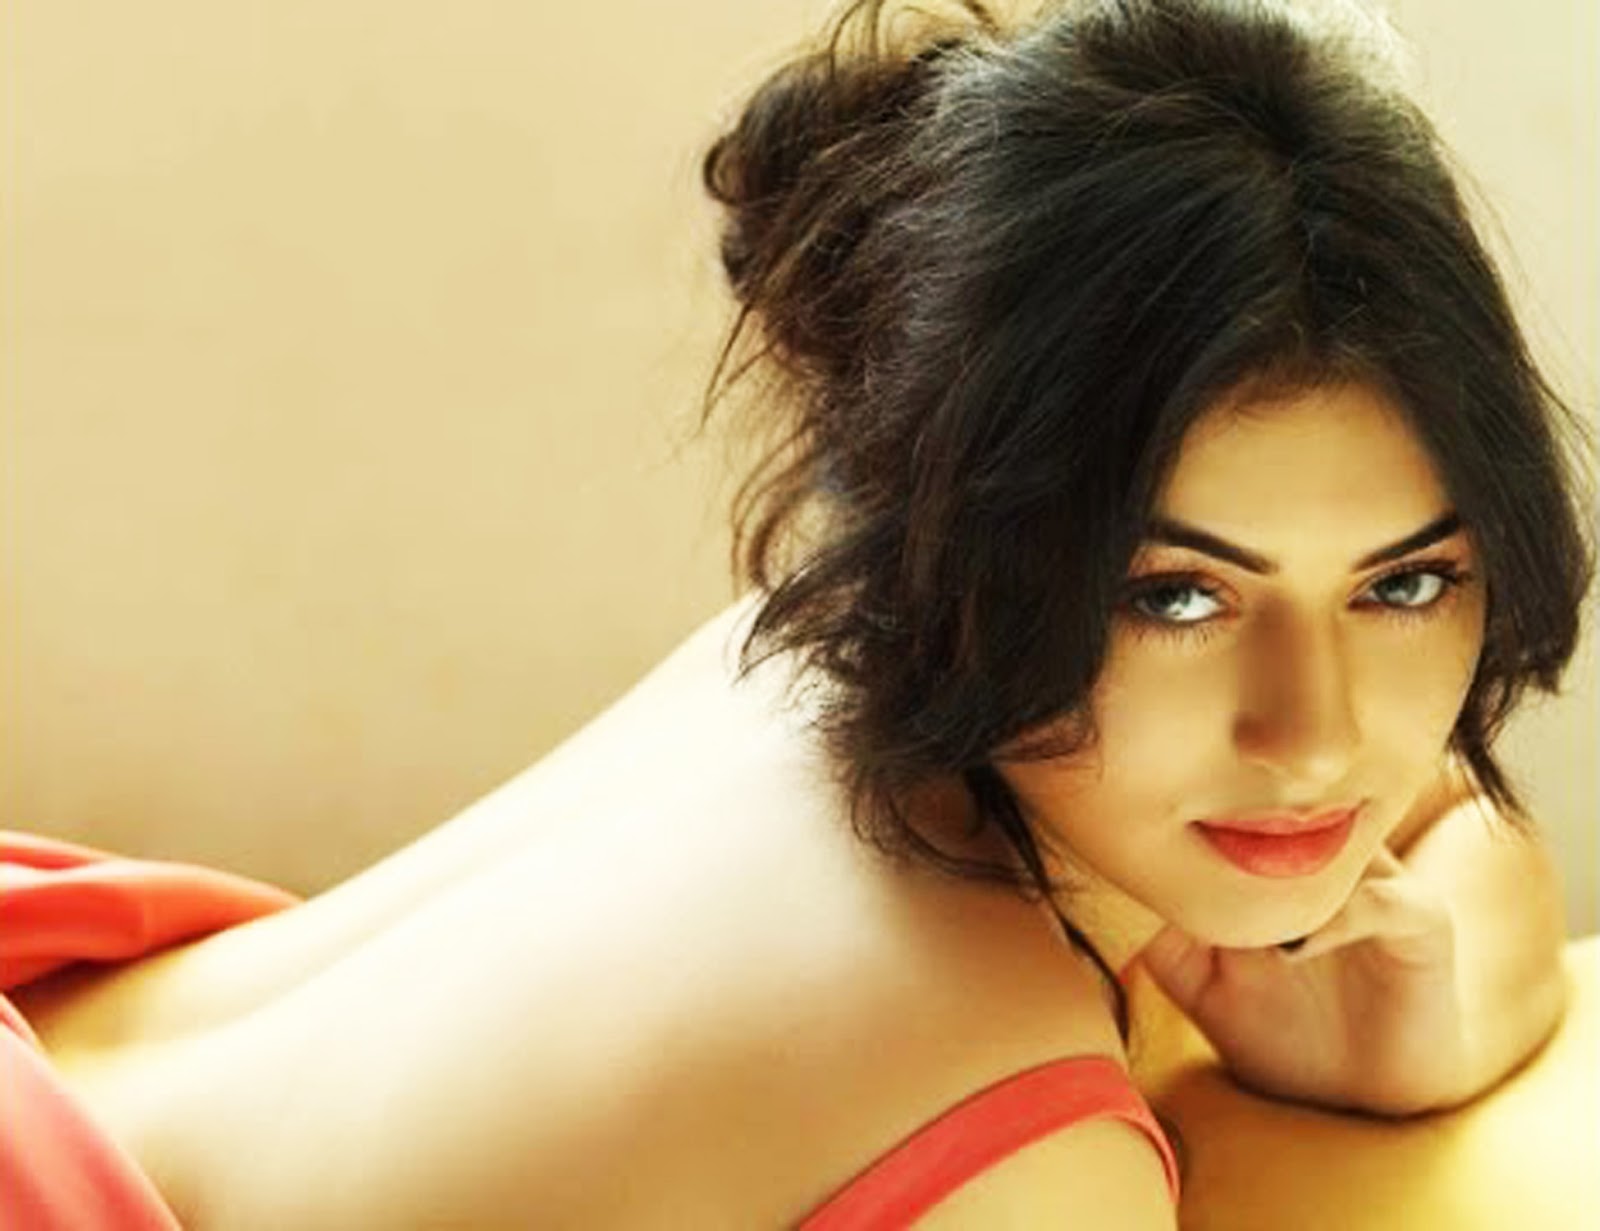 Sexy Beautiful Bubbly Indian Actress: Beautiful Tamil actress Hansika  Motwani - Indian beauty's Hot Photos Free Wallpapers and Videos